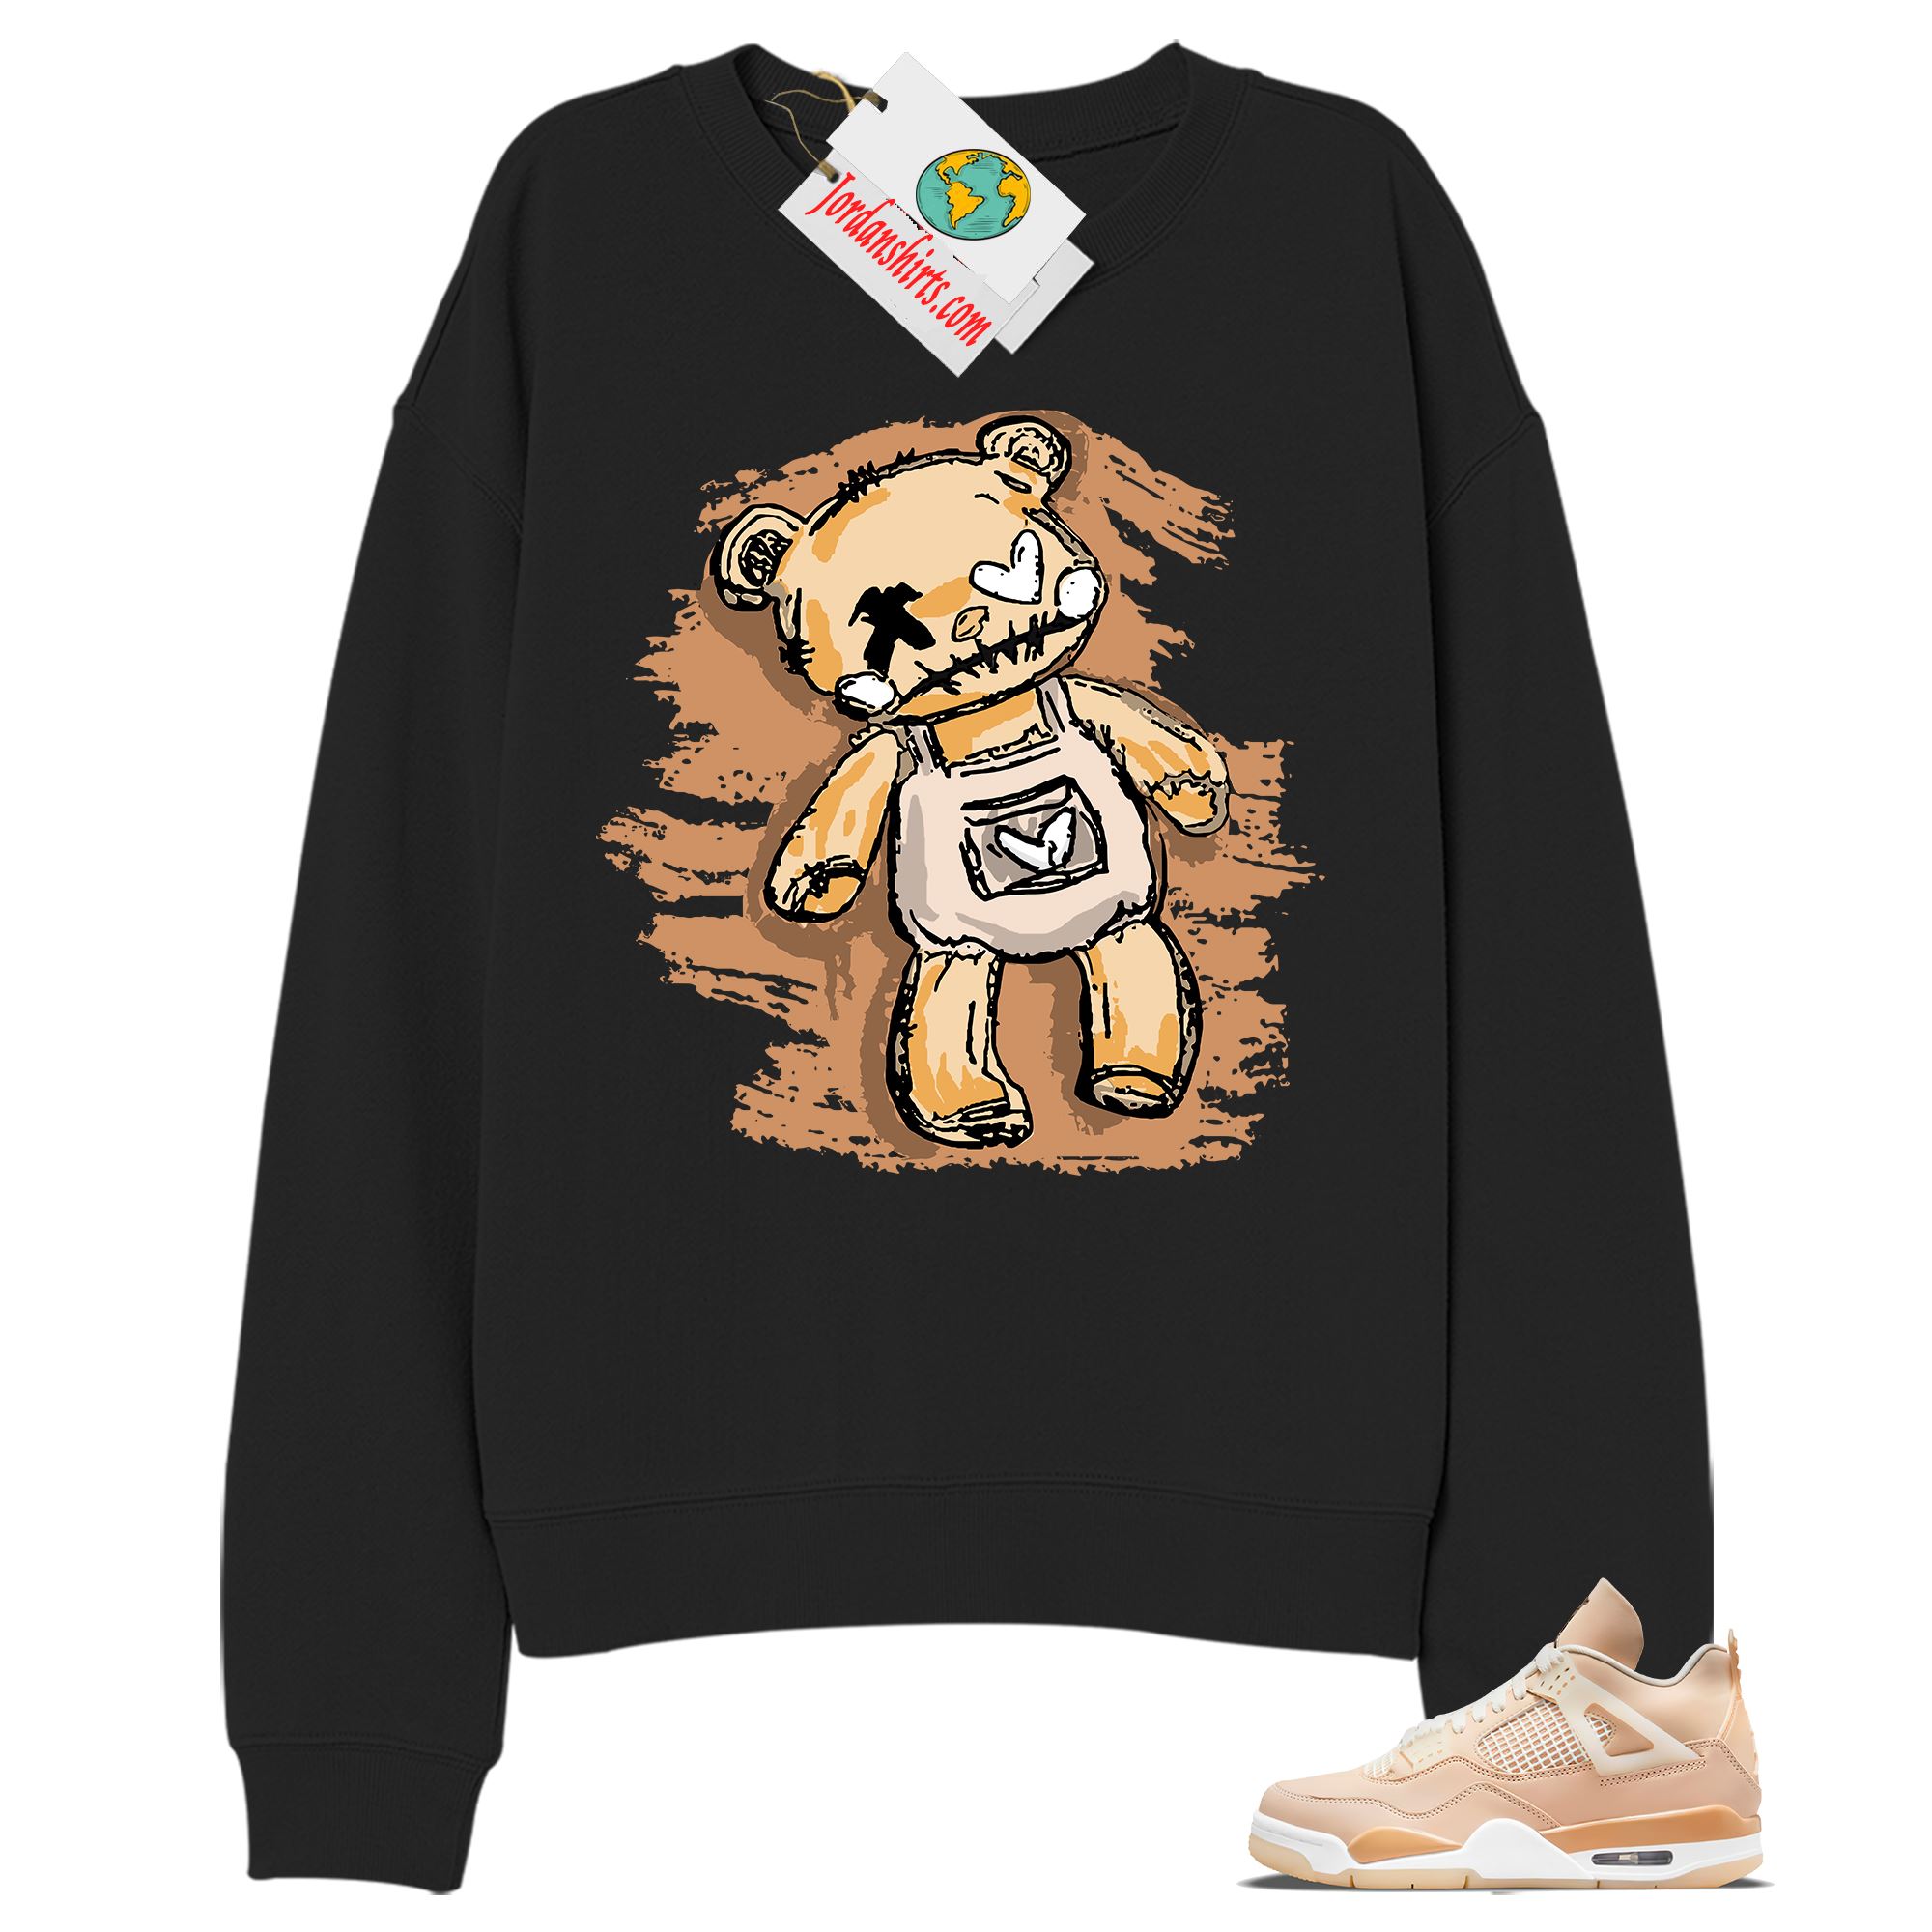 Jordan 4 Sweatshirt, Teddy Bear Broken Heart Black Sweatshirt Air Jordan 4 Shimmer 4s Plus Size Up To 5xl